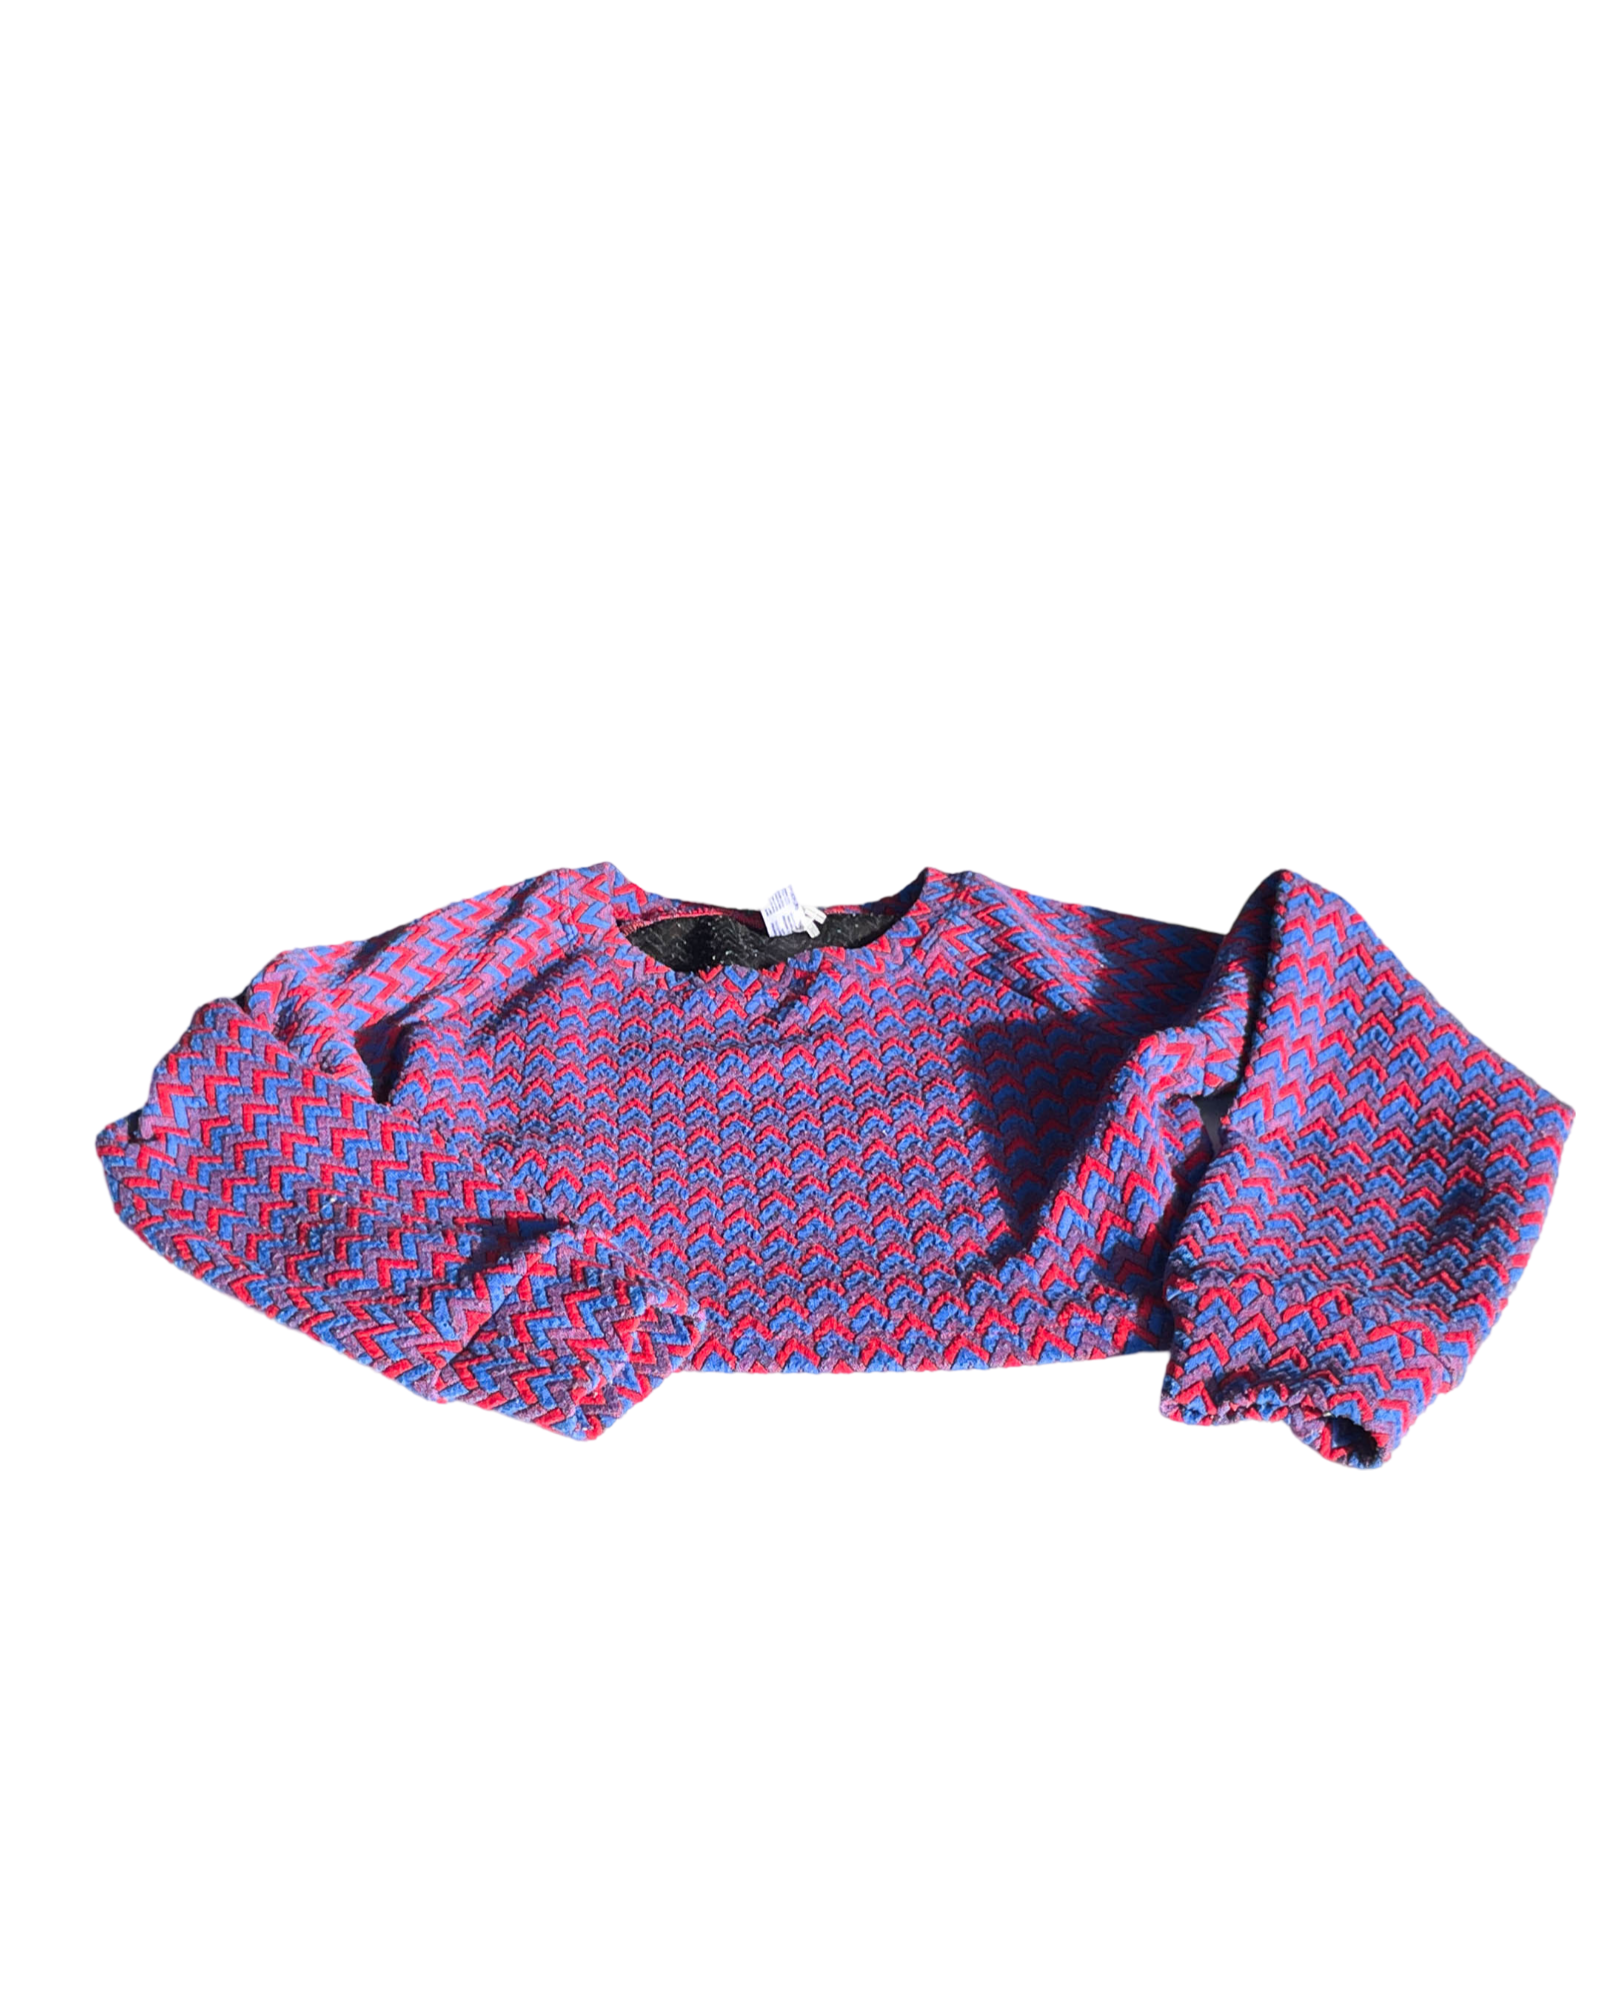 VTG American Apparel Cropped Chevron Sweater. In size S|SKU 5050